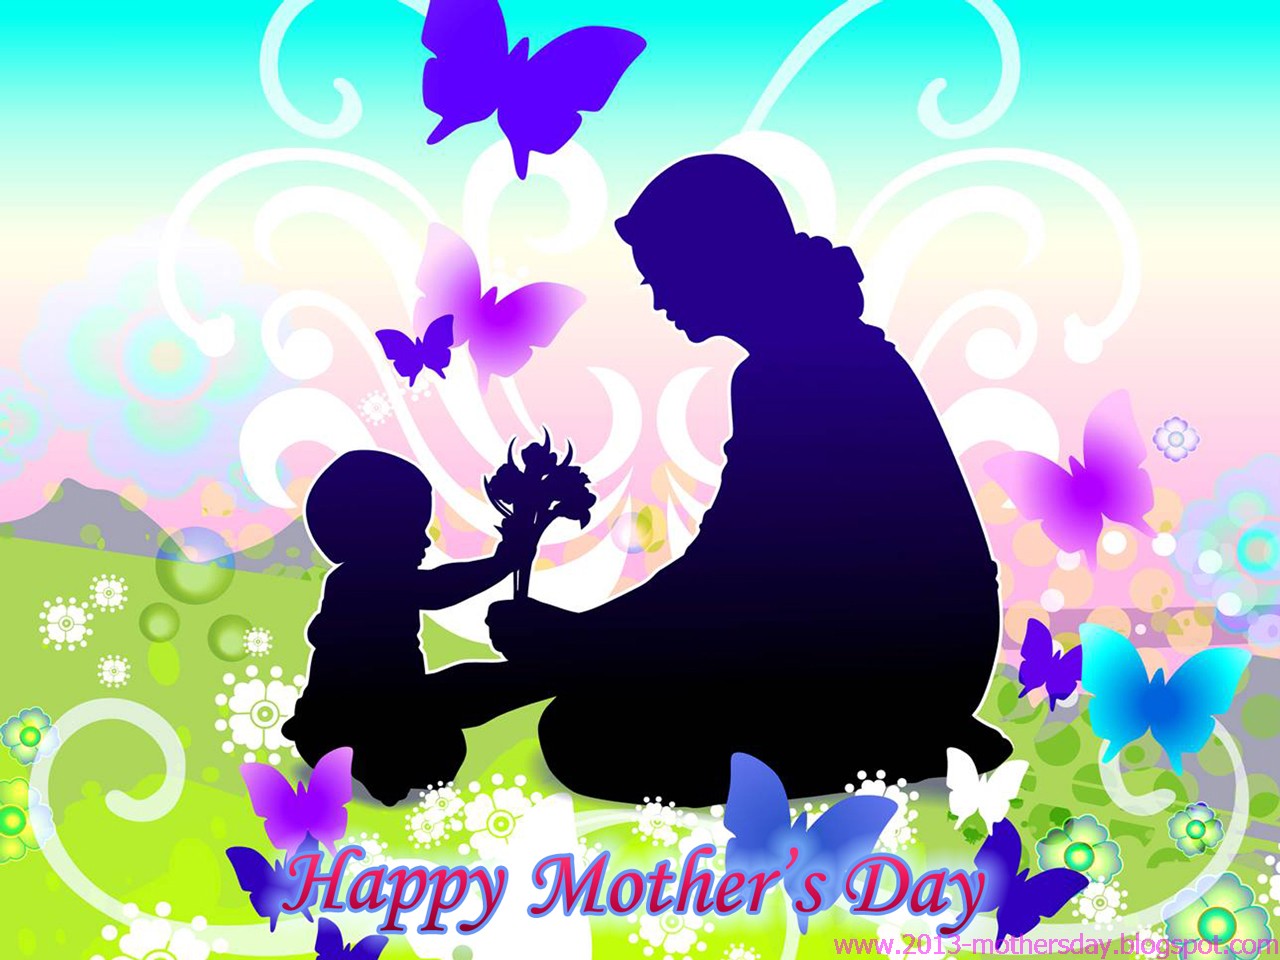 49+] Happy Mother's Day Wallpaper Background - WallpaperSafari